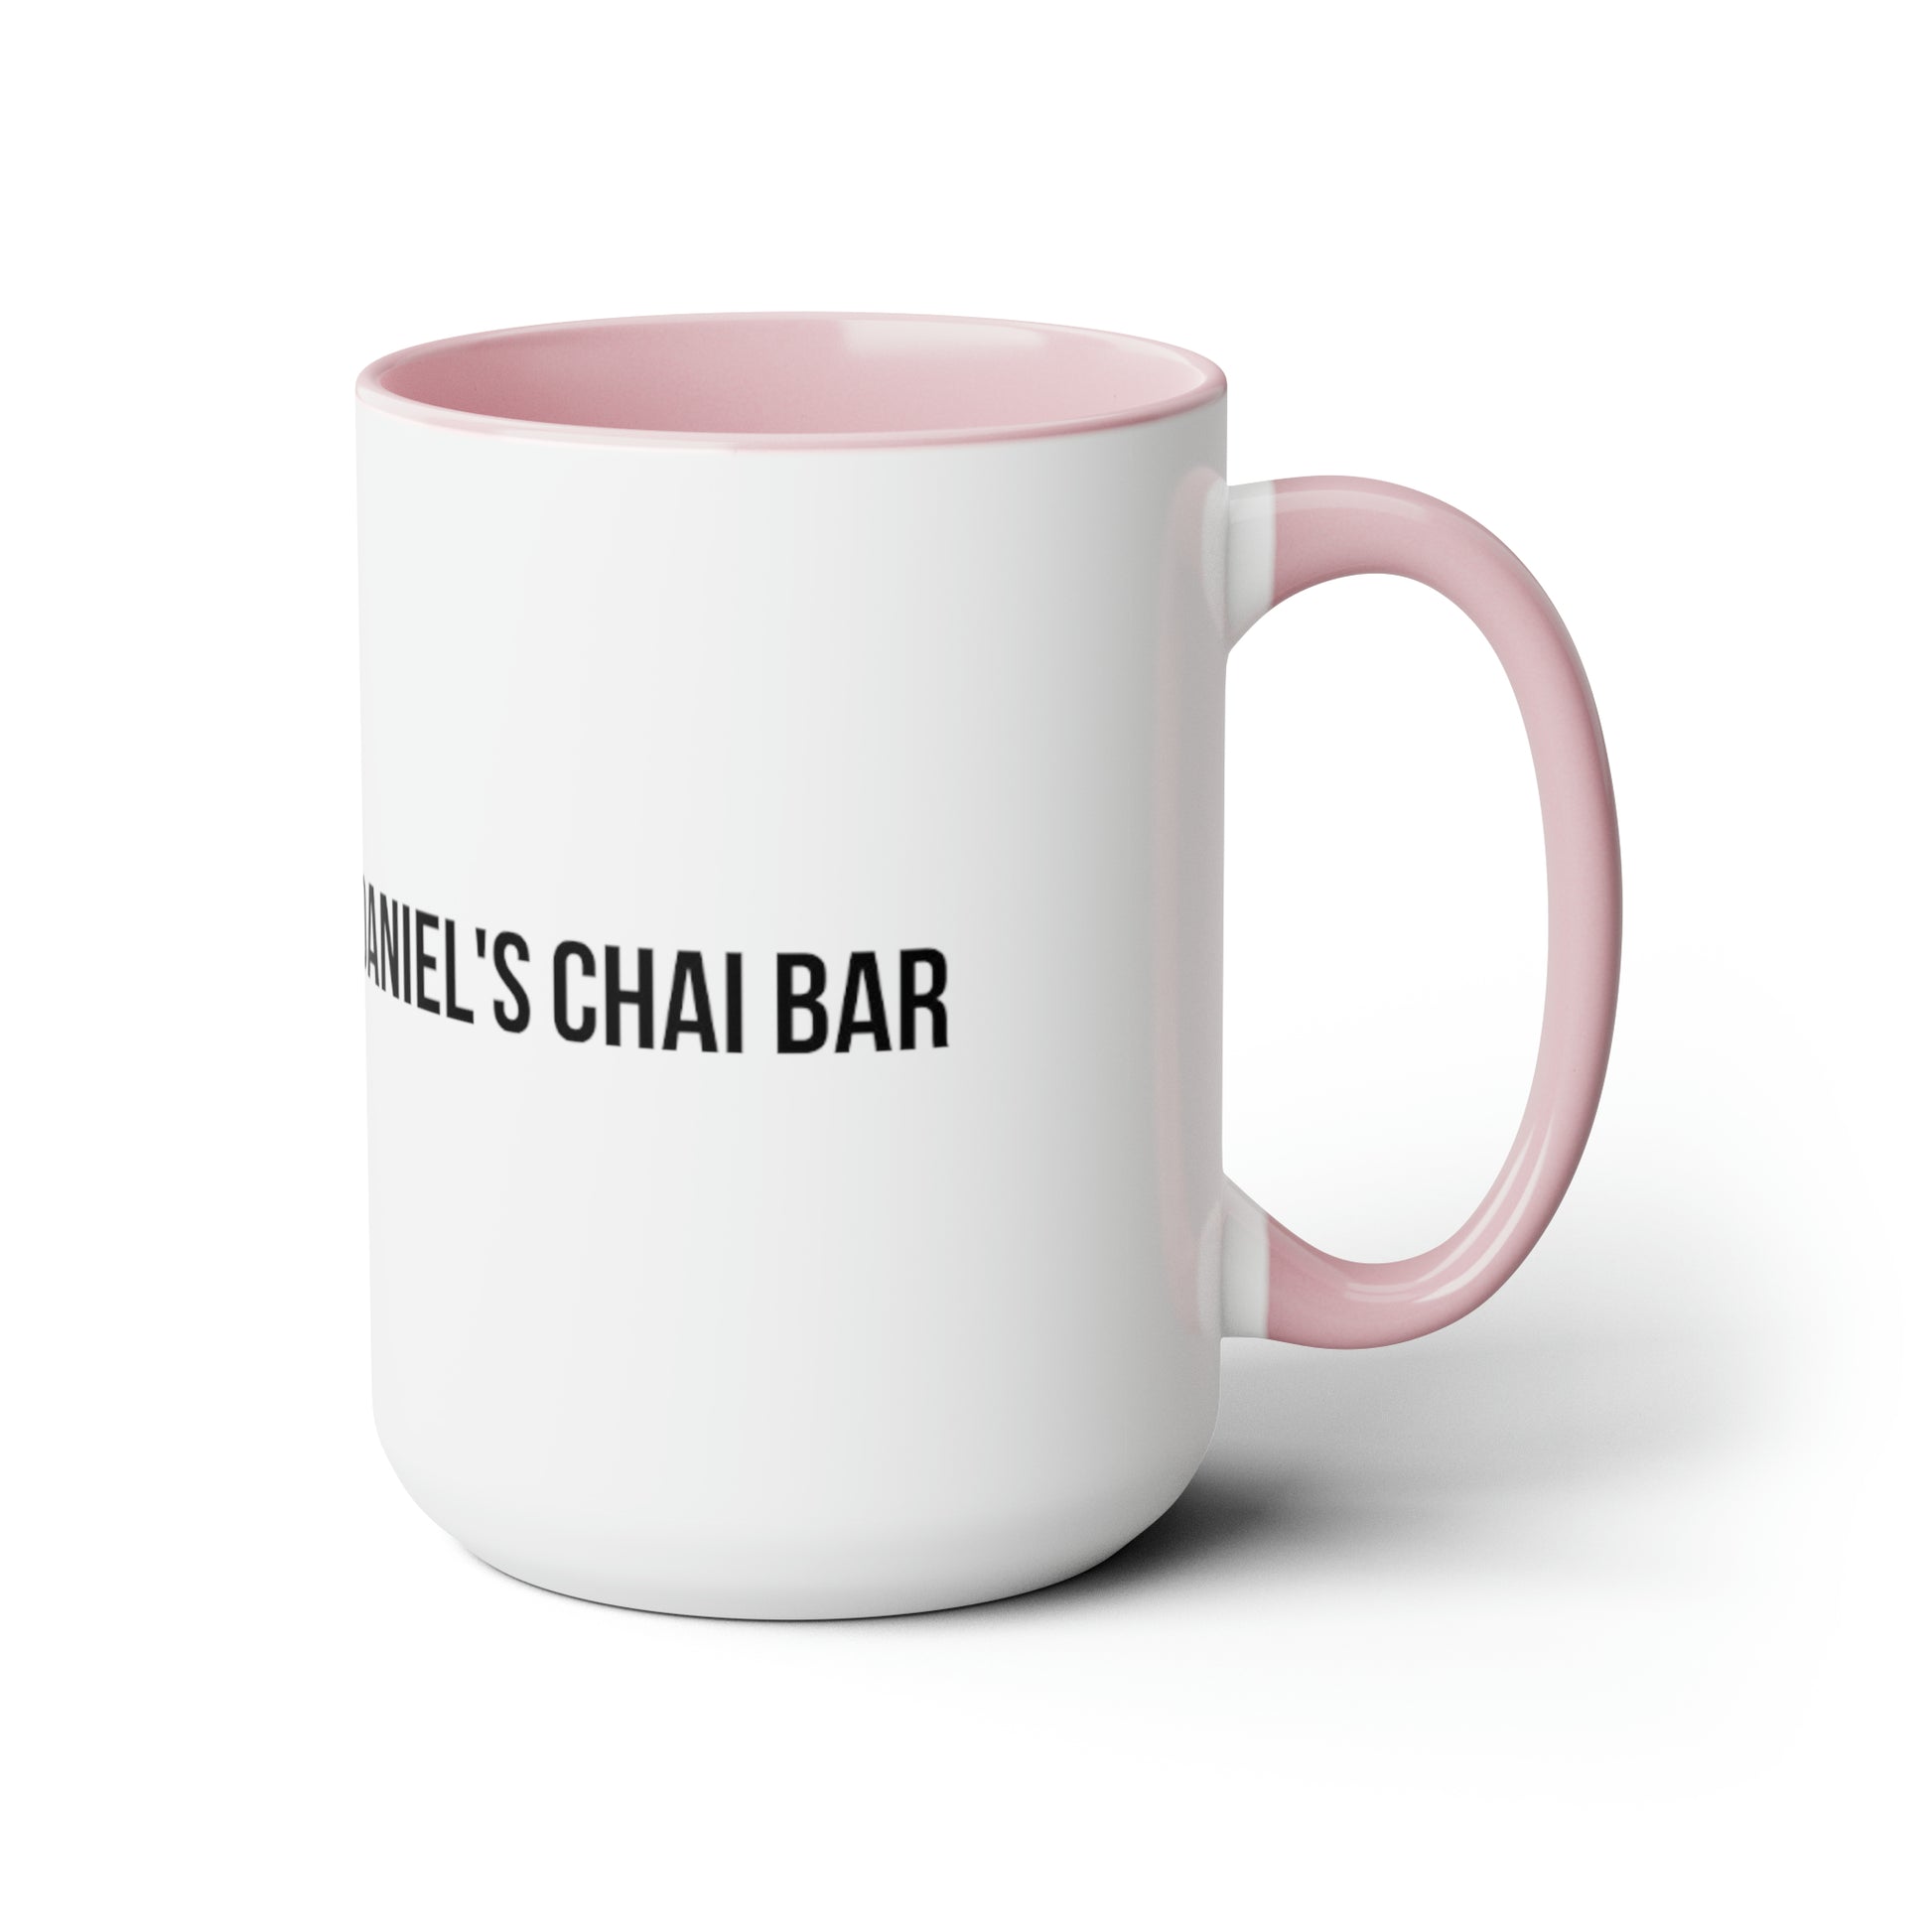 Lion - Two-Tone Coffee Mugs, 15oz - Daniel's Chai Bar